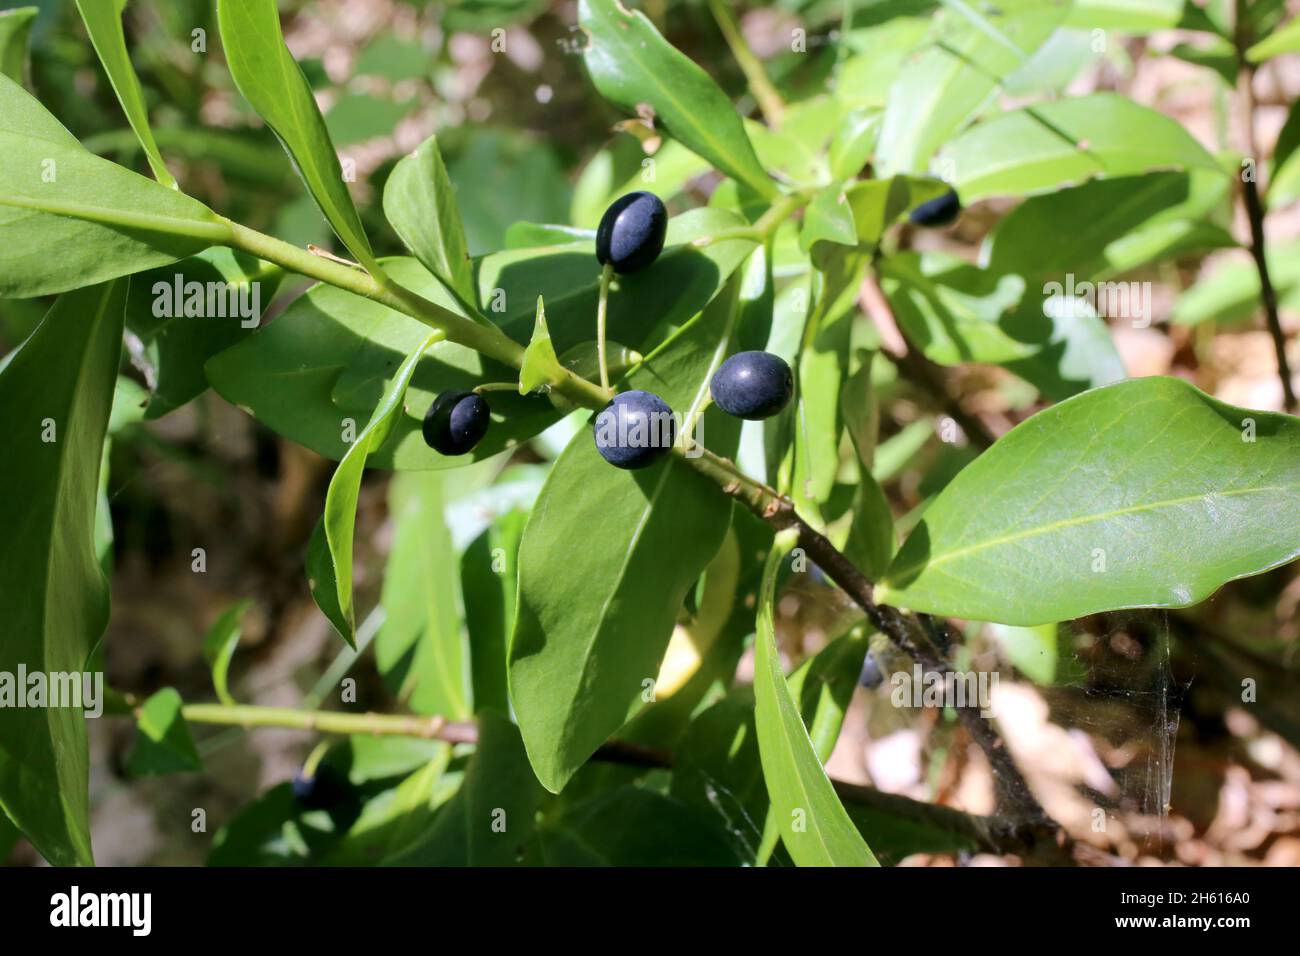 Daphne pontica, Thymelaeaceae. Wild plant shot in summer. Stock Photo